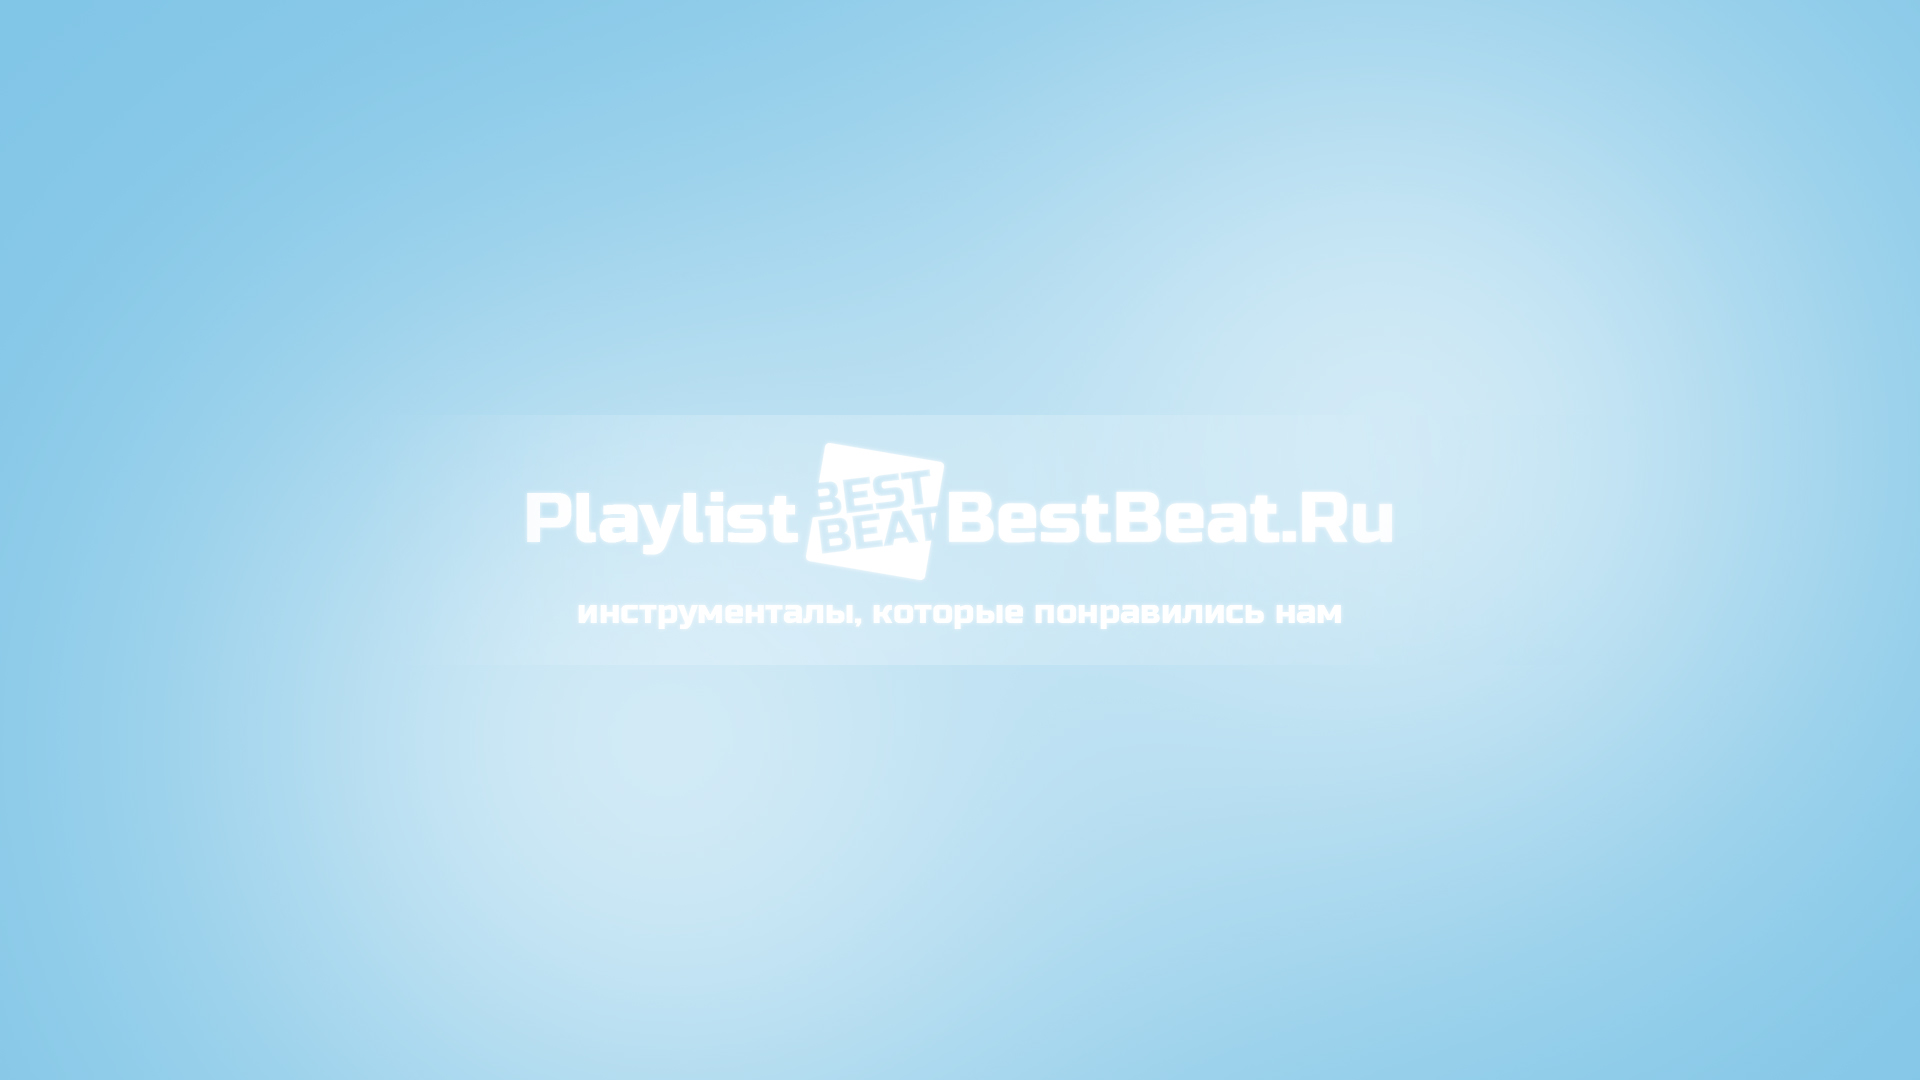 Плейлист BestBeat.Ru